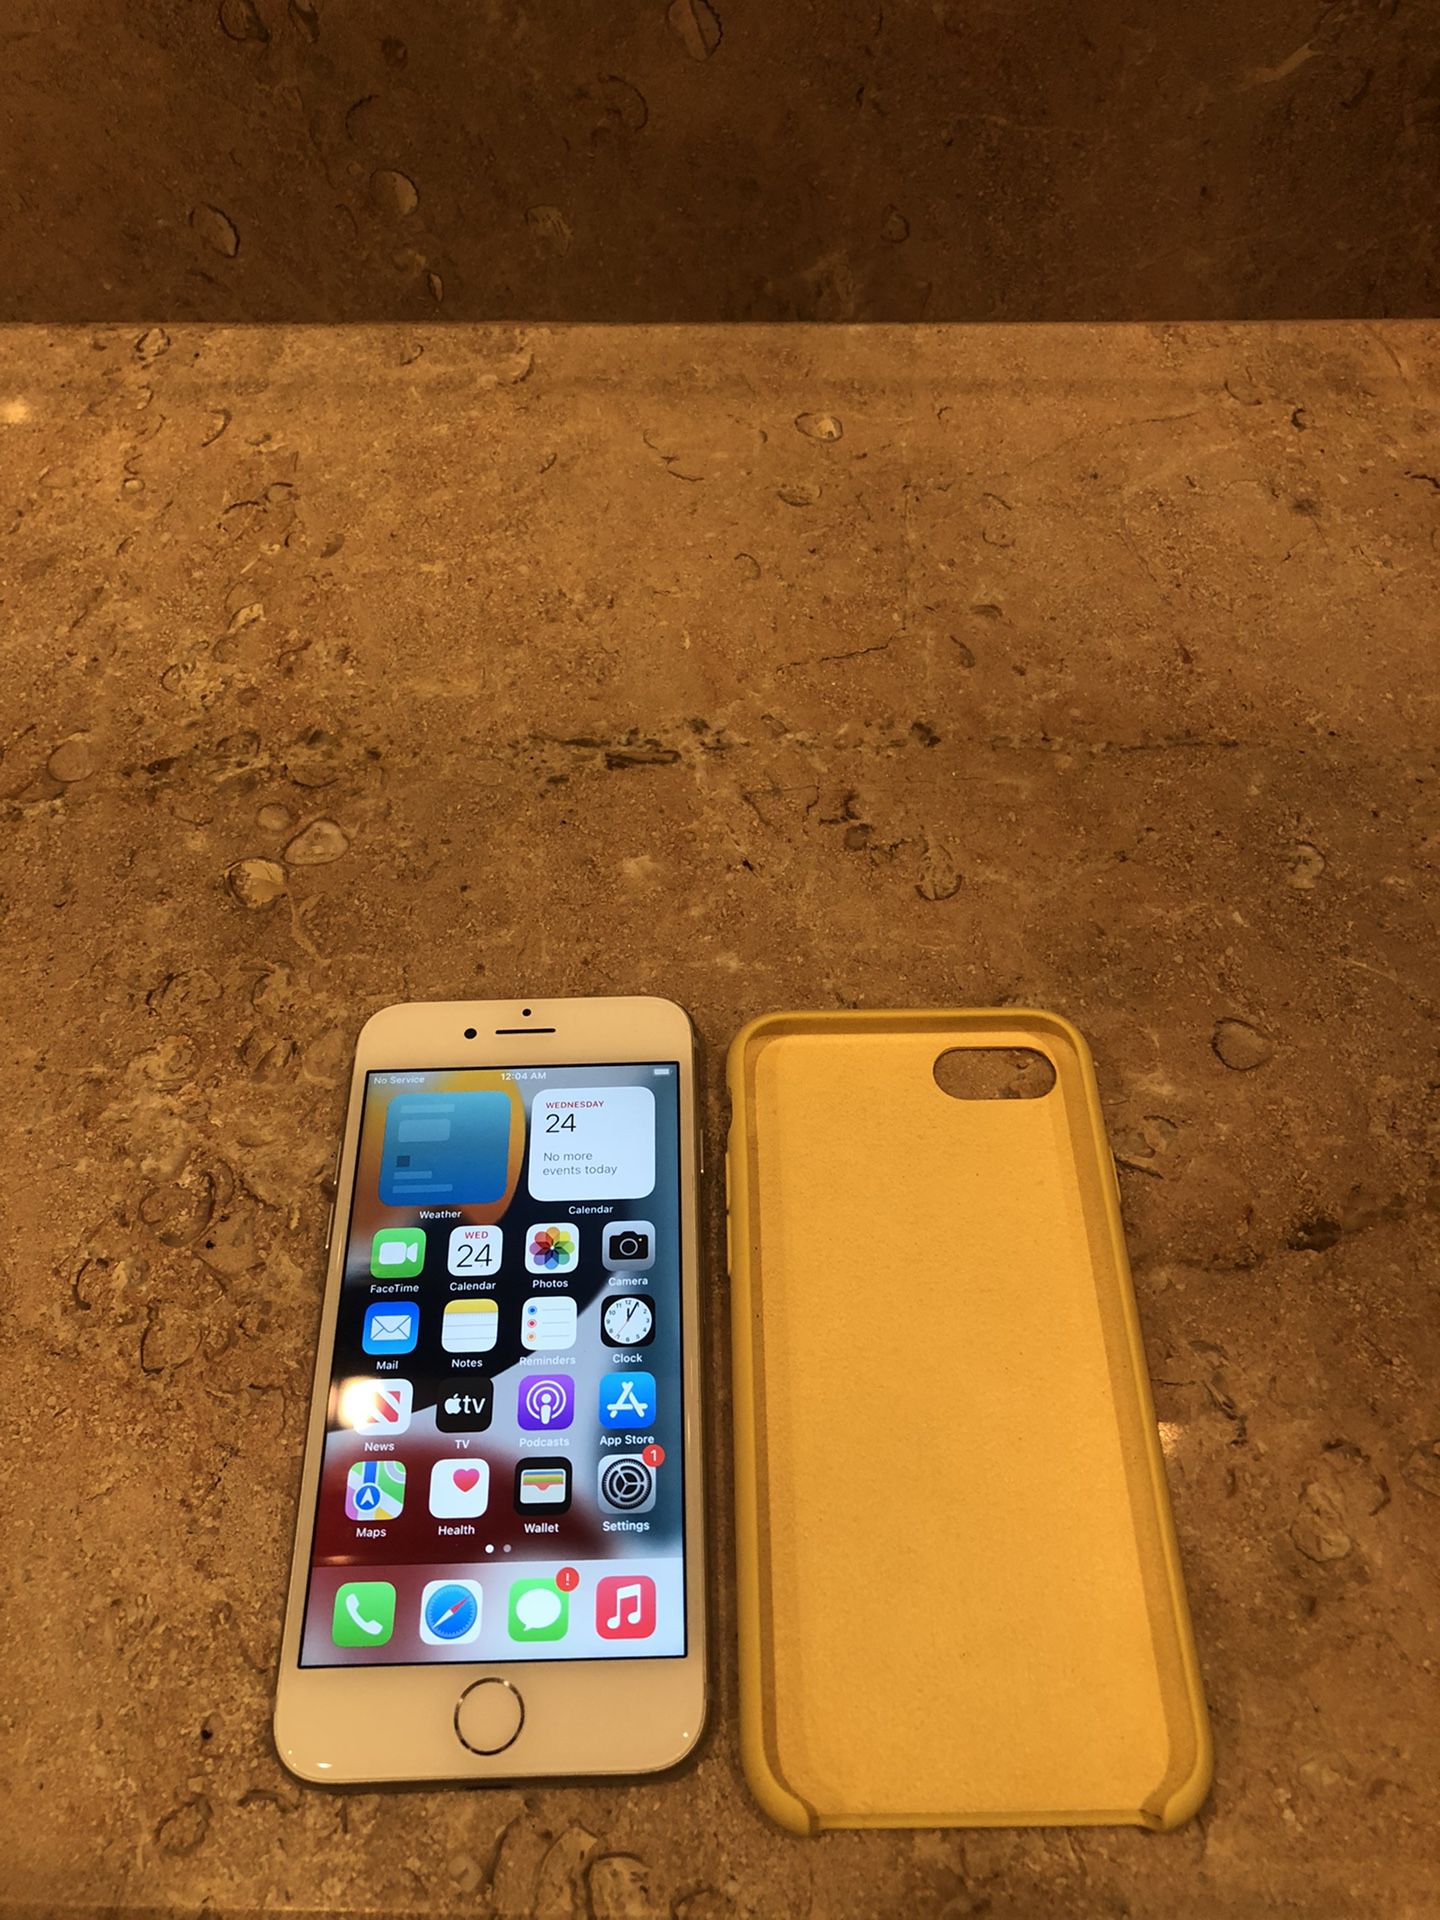 iPhone 7 Silver 32GB, Unlocked! Yellow Case! And Original Box!